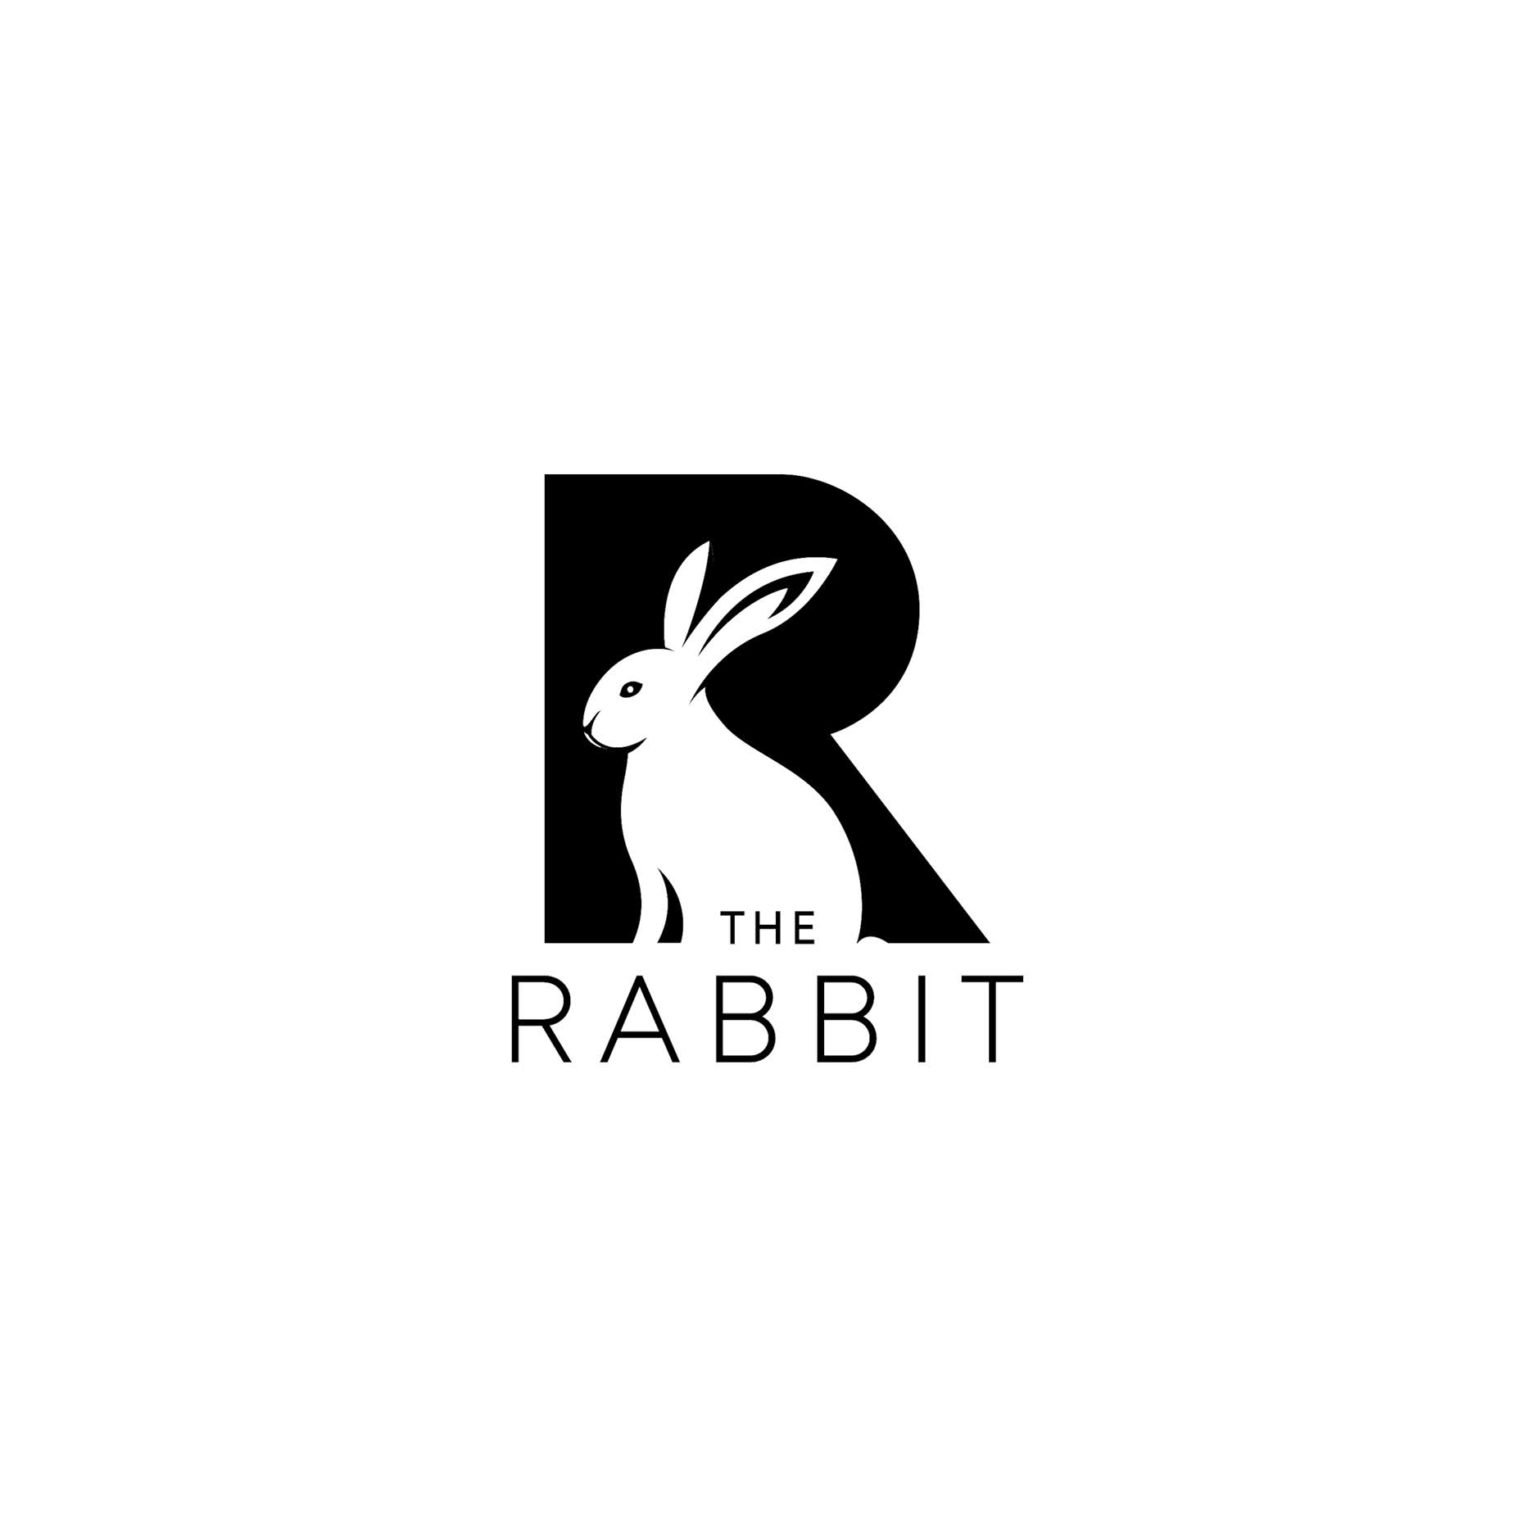 Rabbit hotel